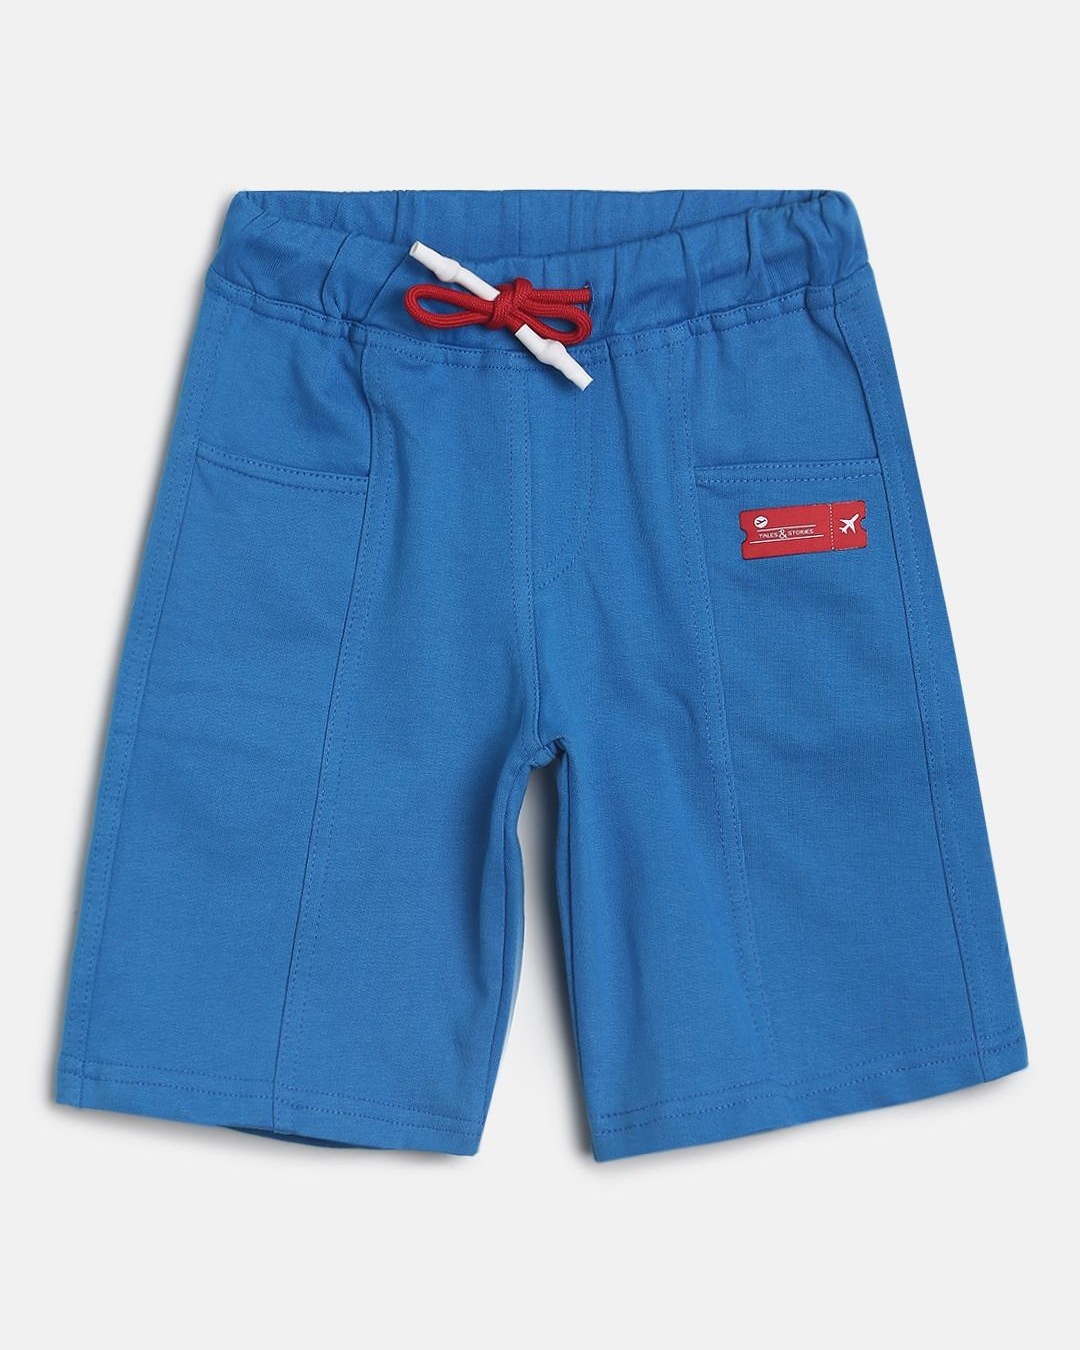 Buy Boys Blue Shorts for Kids - Boys Blue Online at Bewakoof